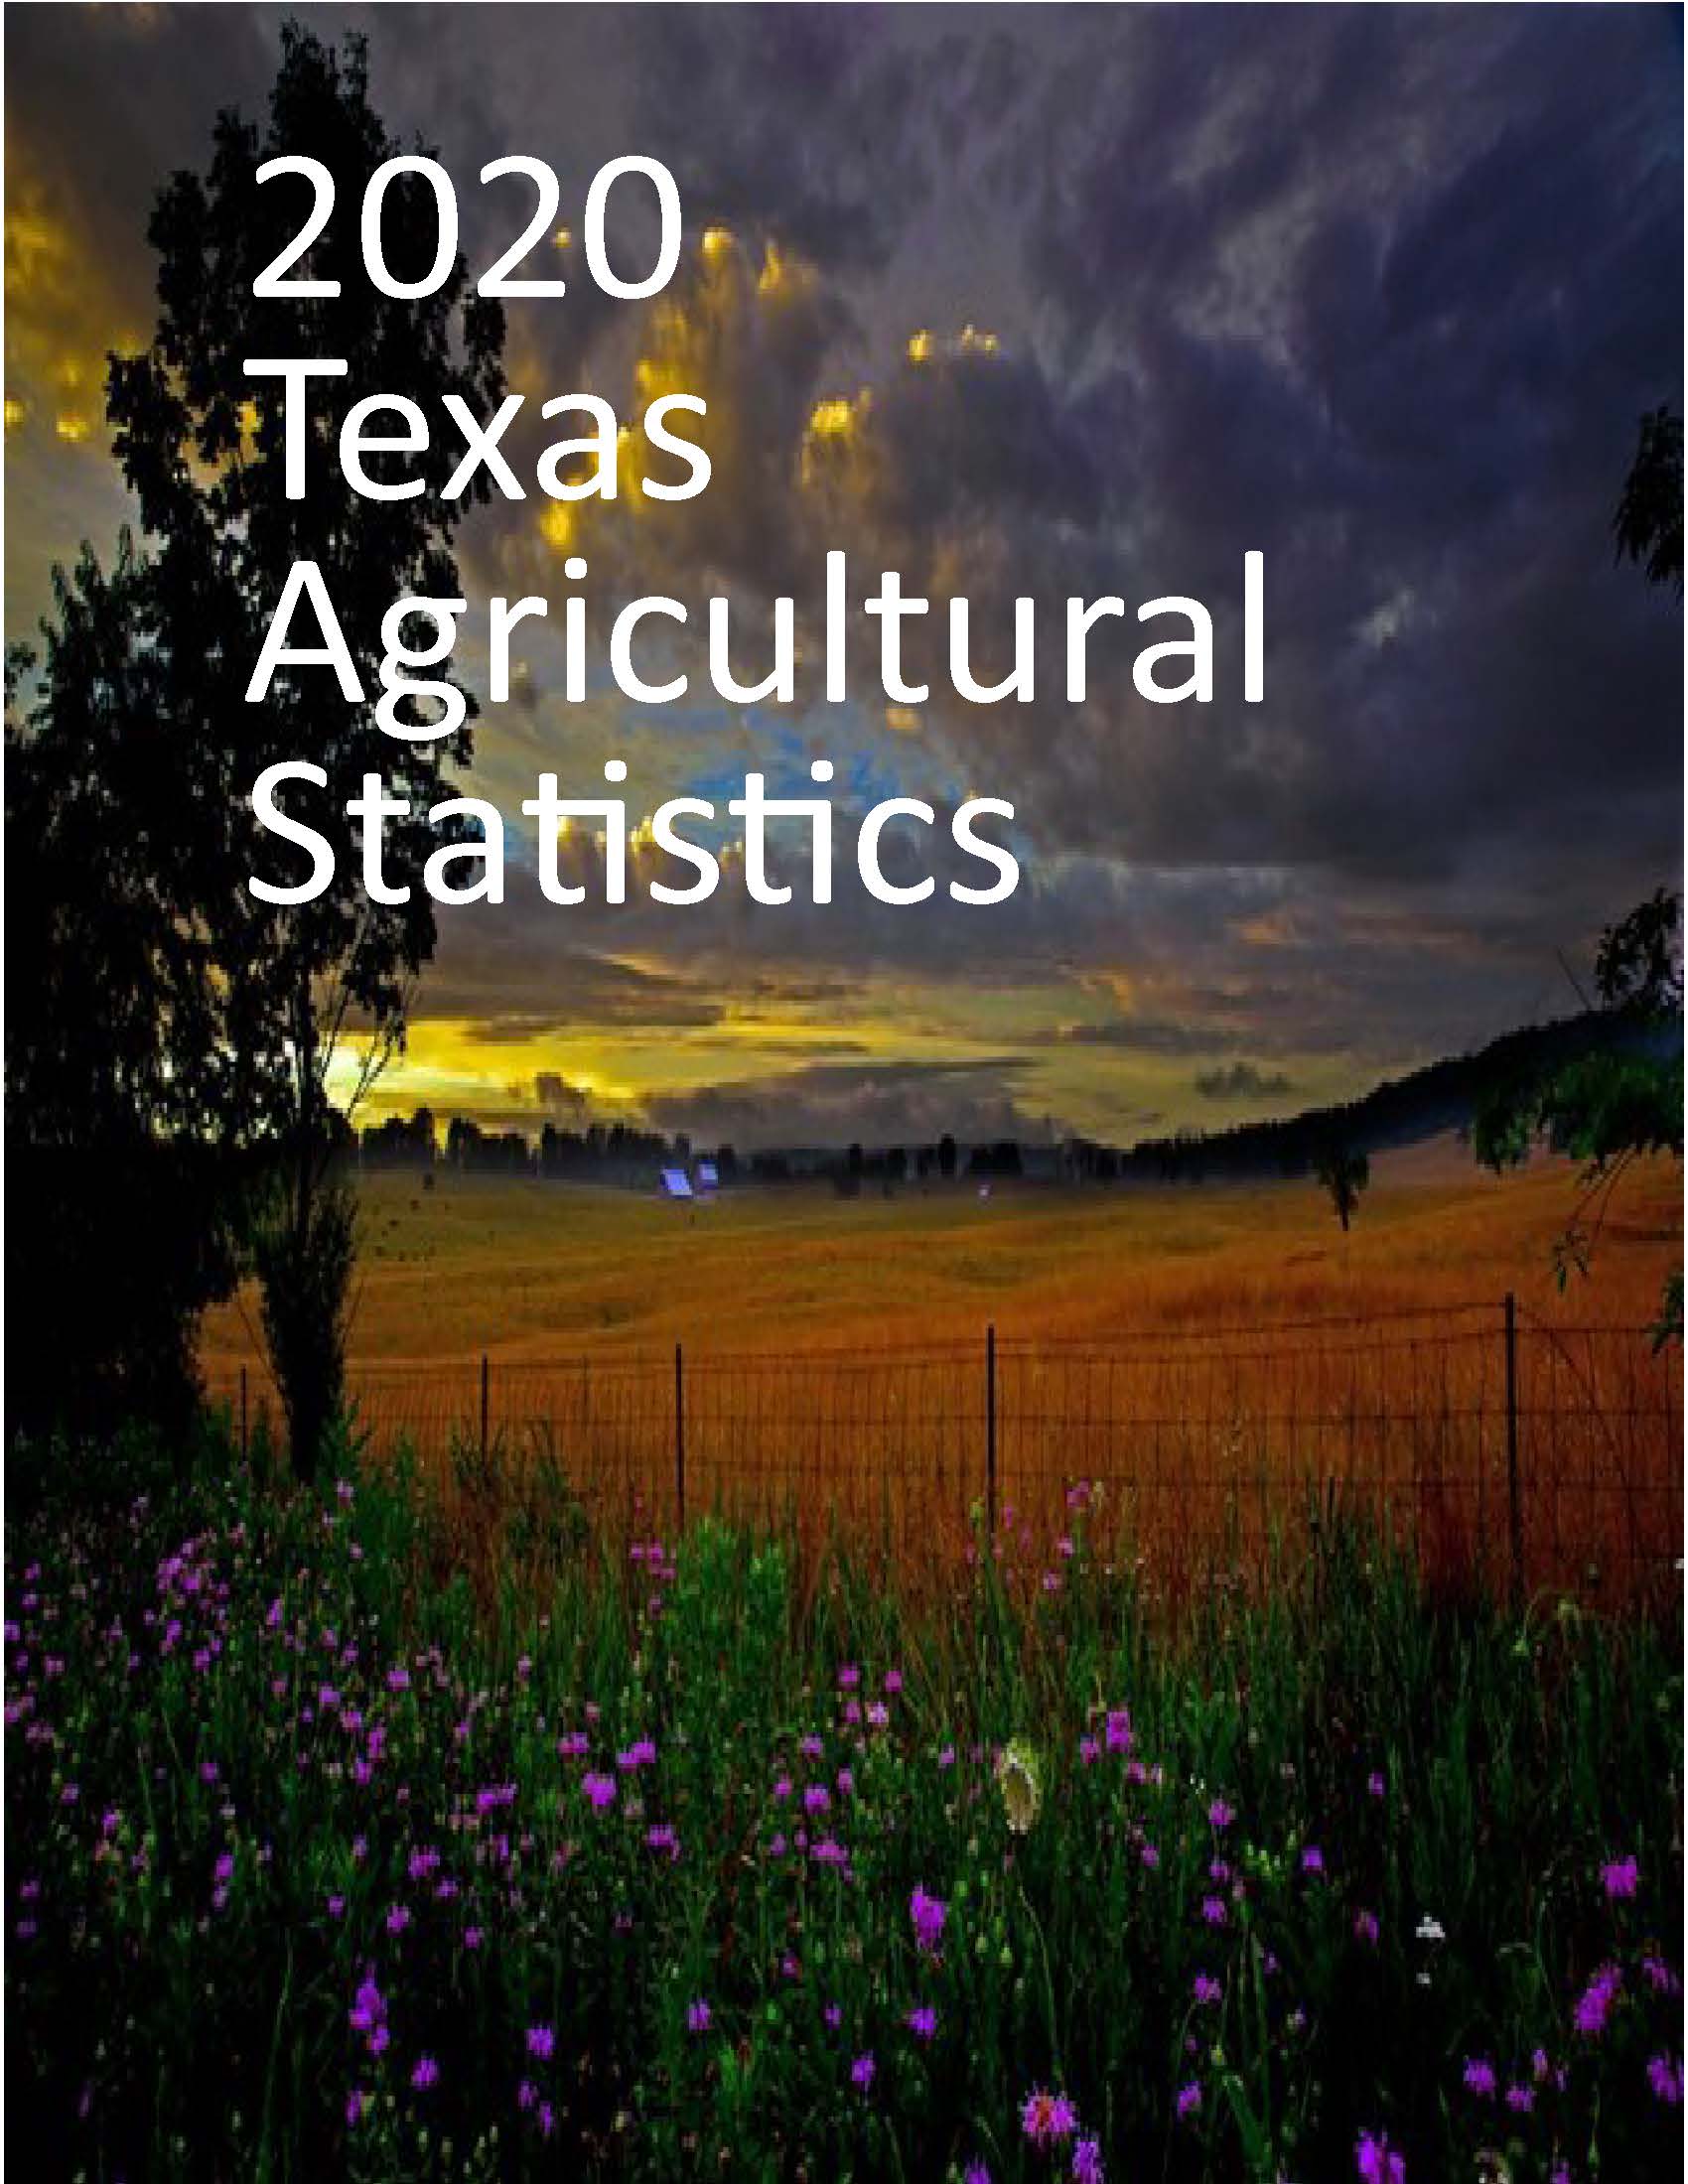 2020 Texas Agricultrual Statistics